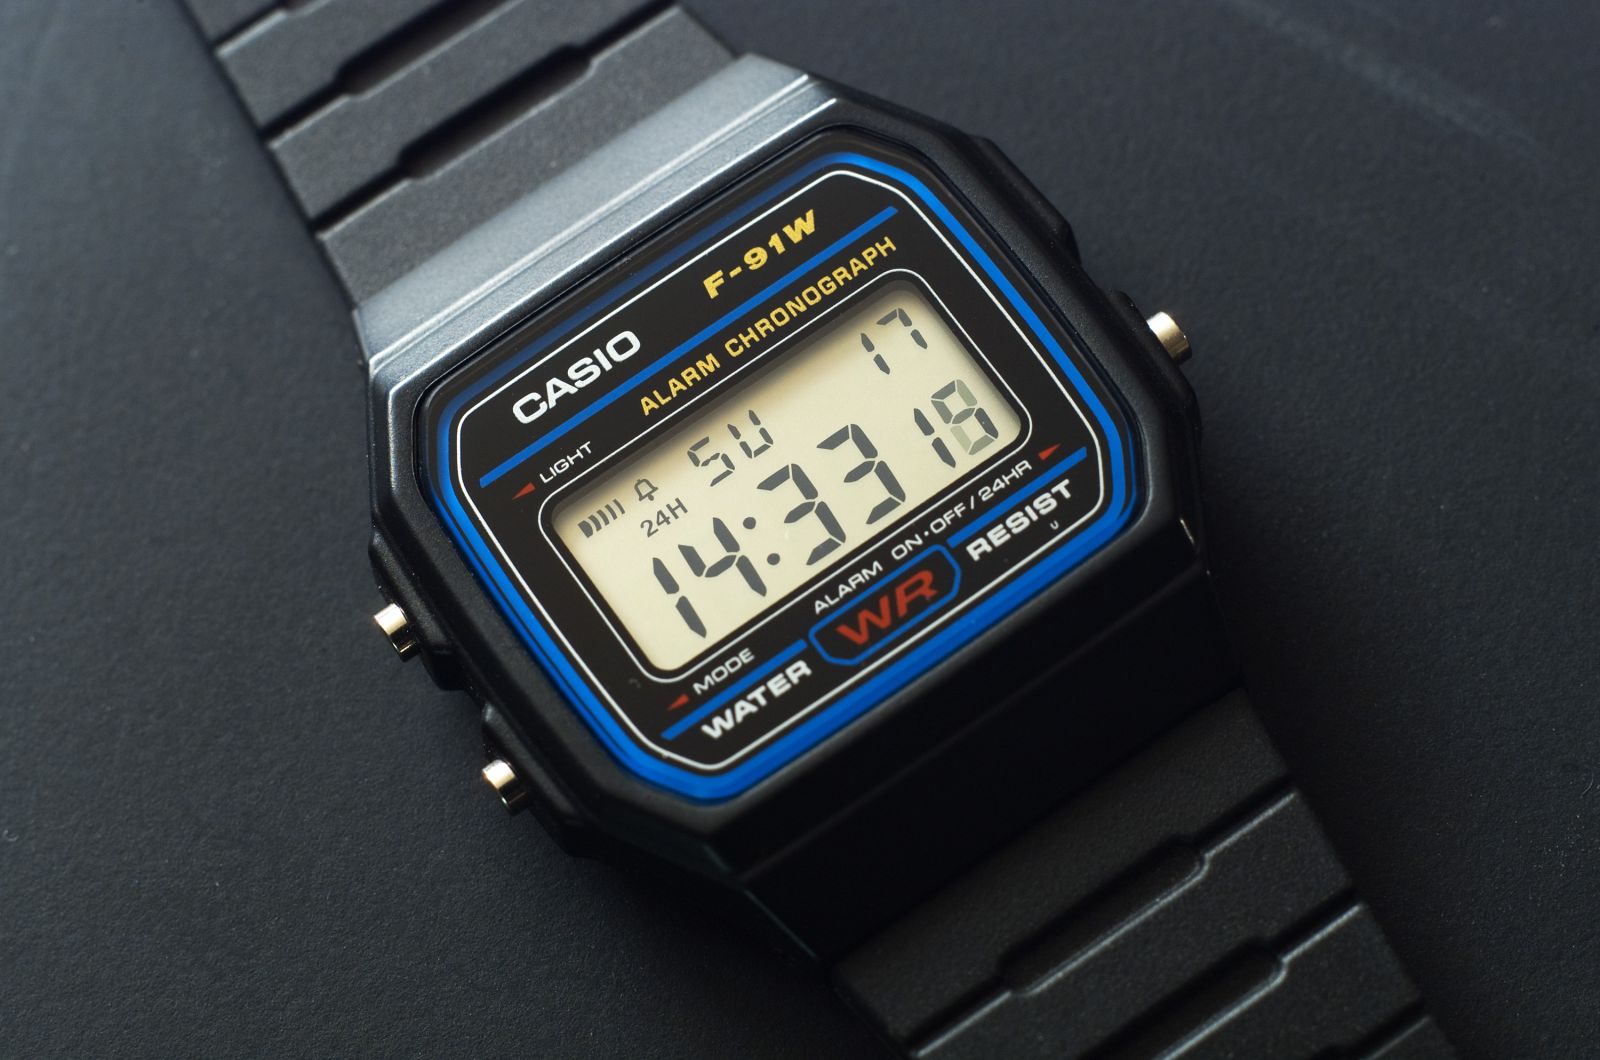 Terrorists around the world love this classic Casio wristwatch